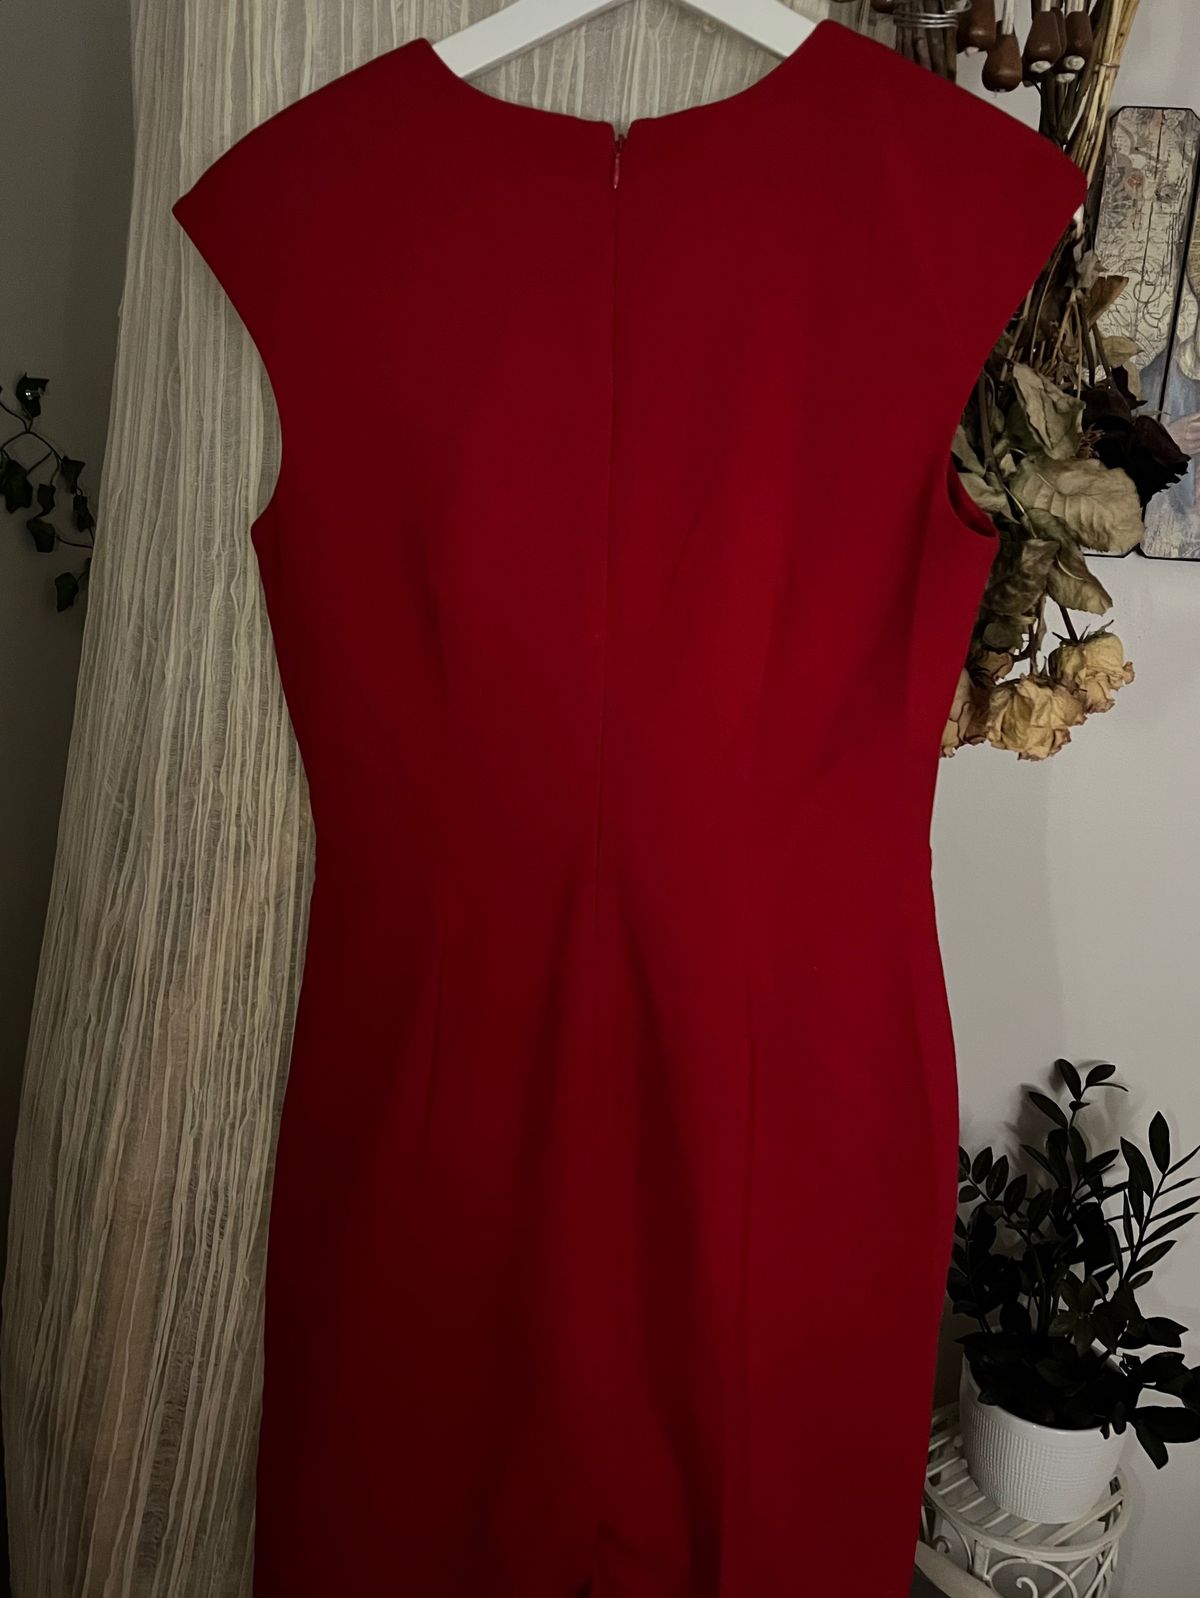 Calvin Klein Size 8 Wedding Guest Plunge Red Cocktail Dress on Queenly